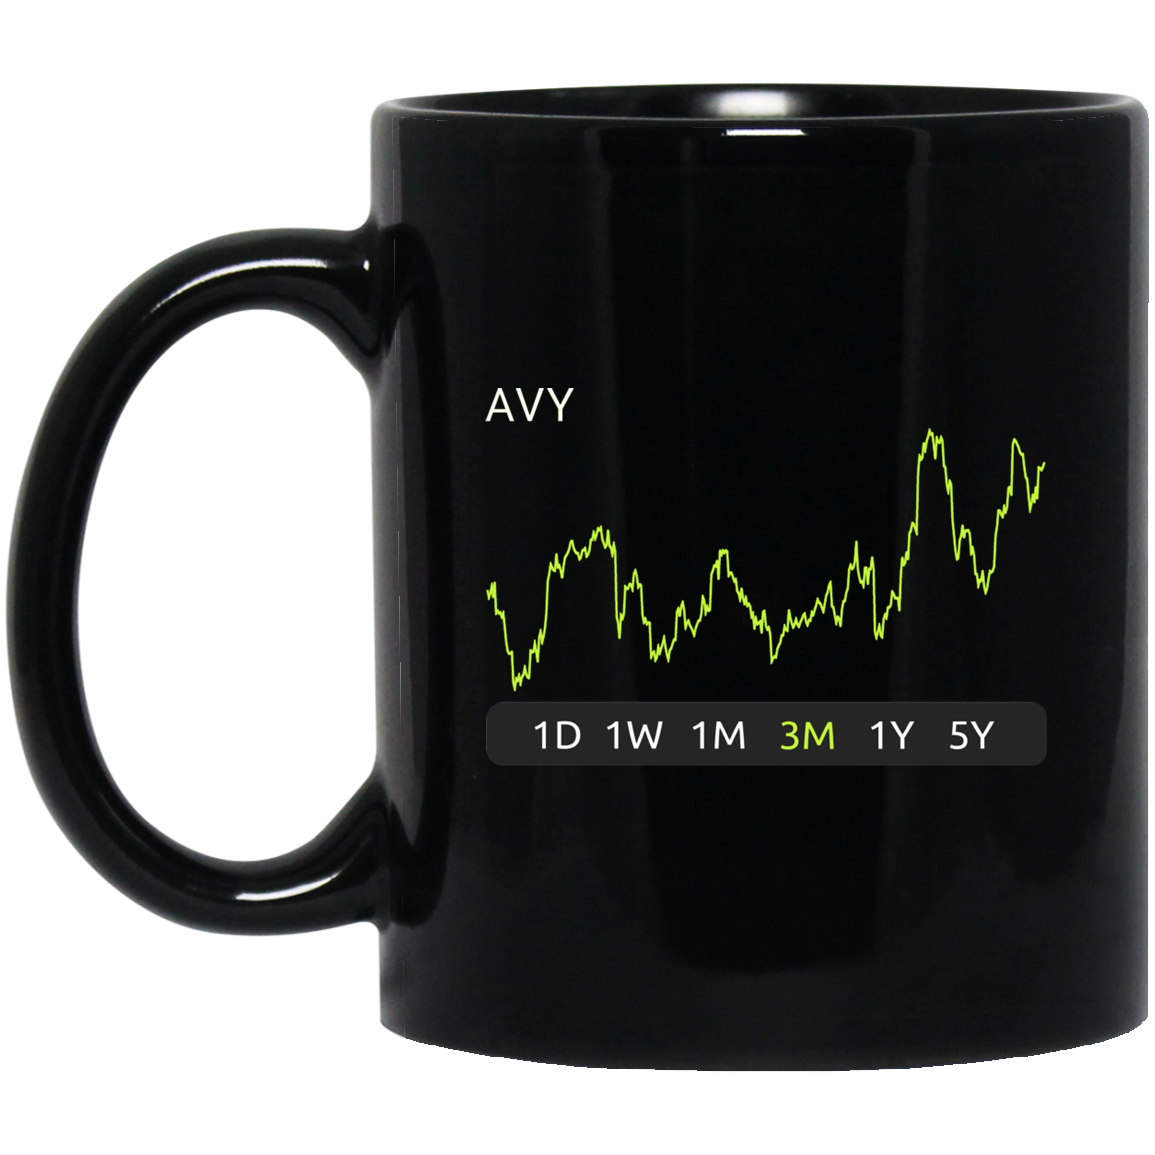 AVY Stock 3m Mug